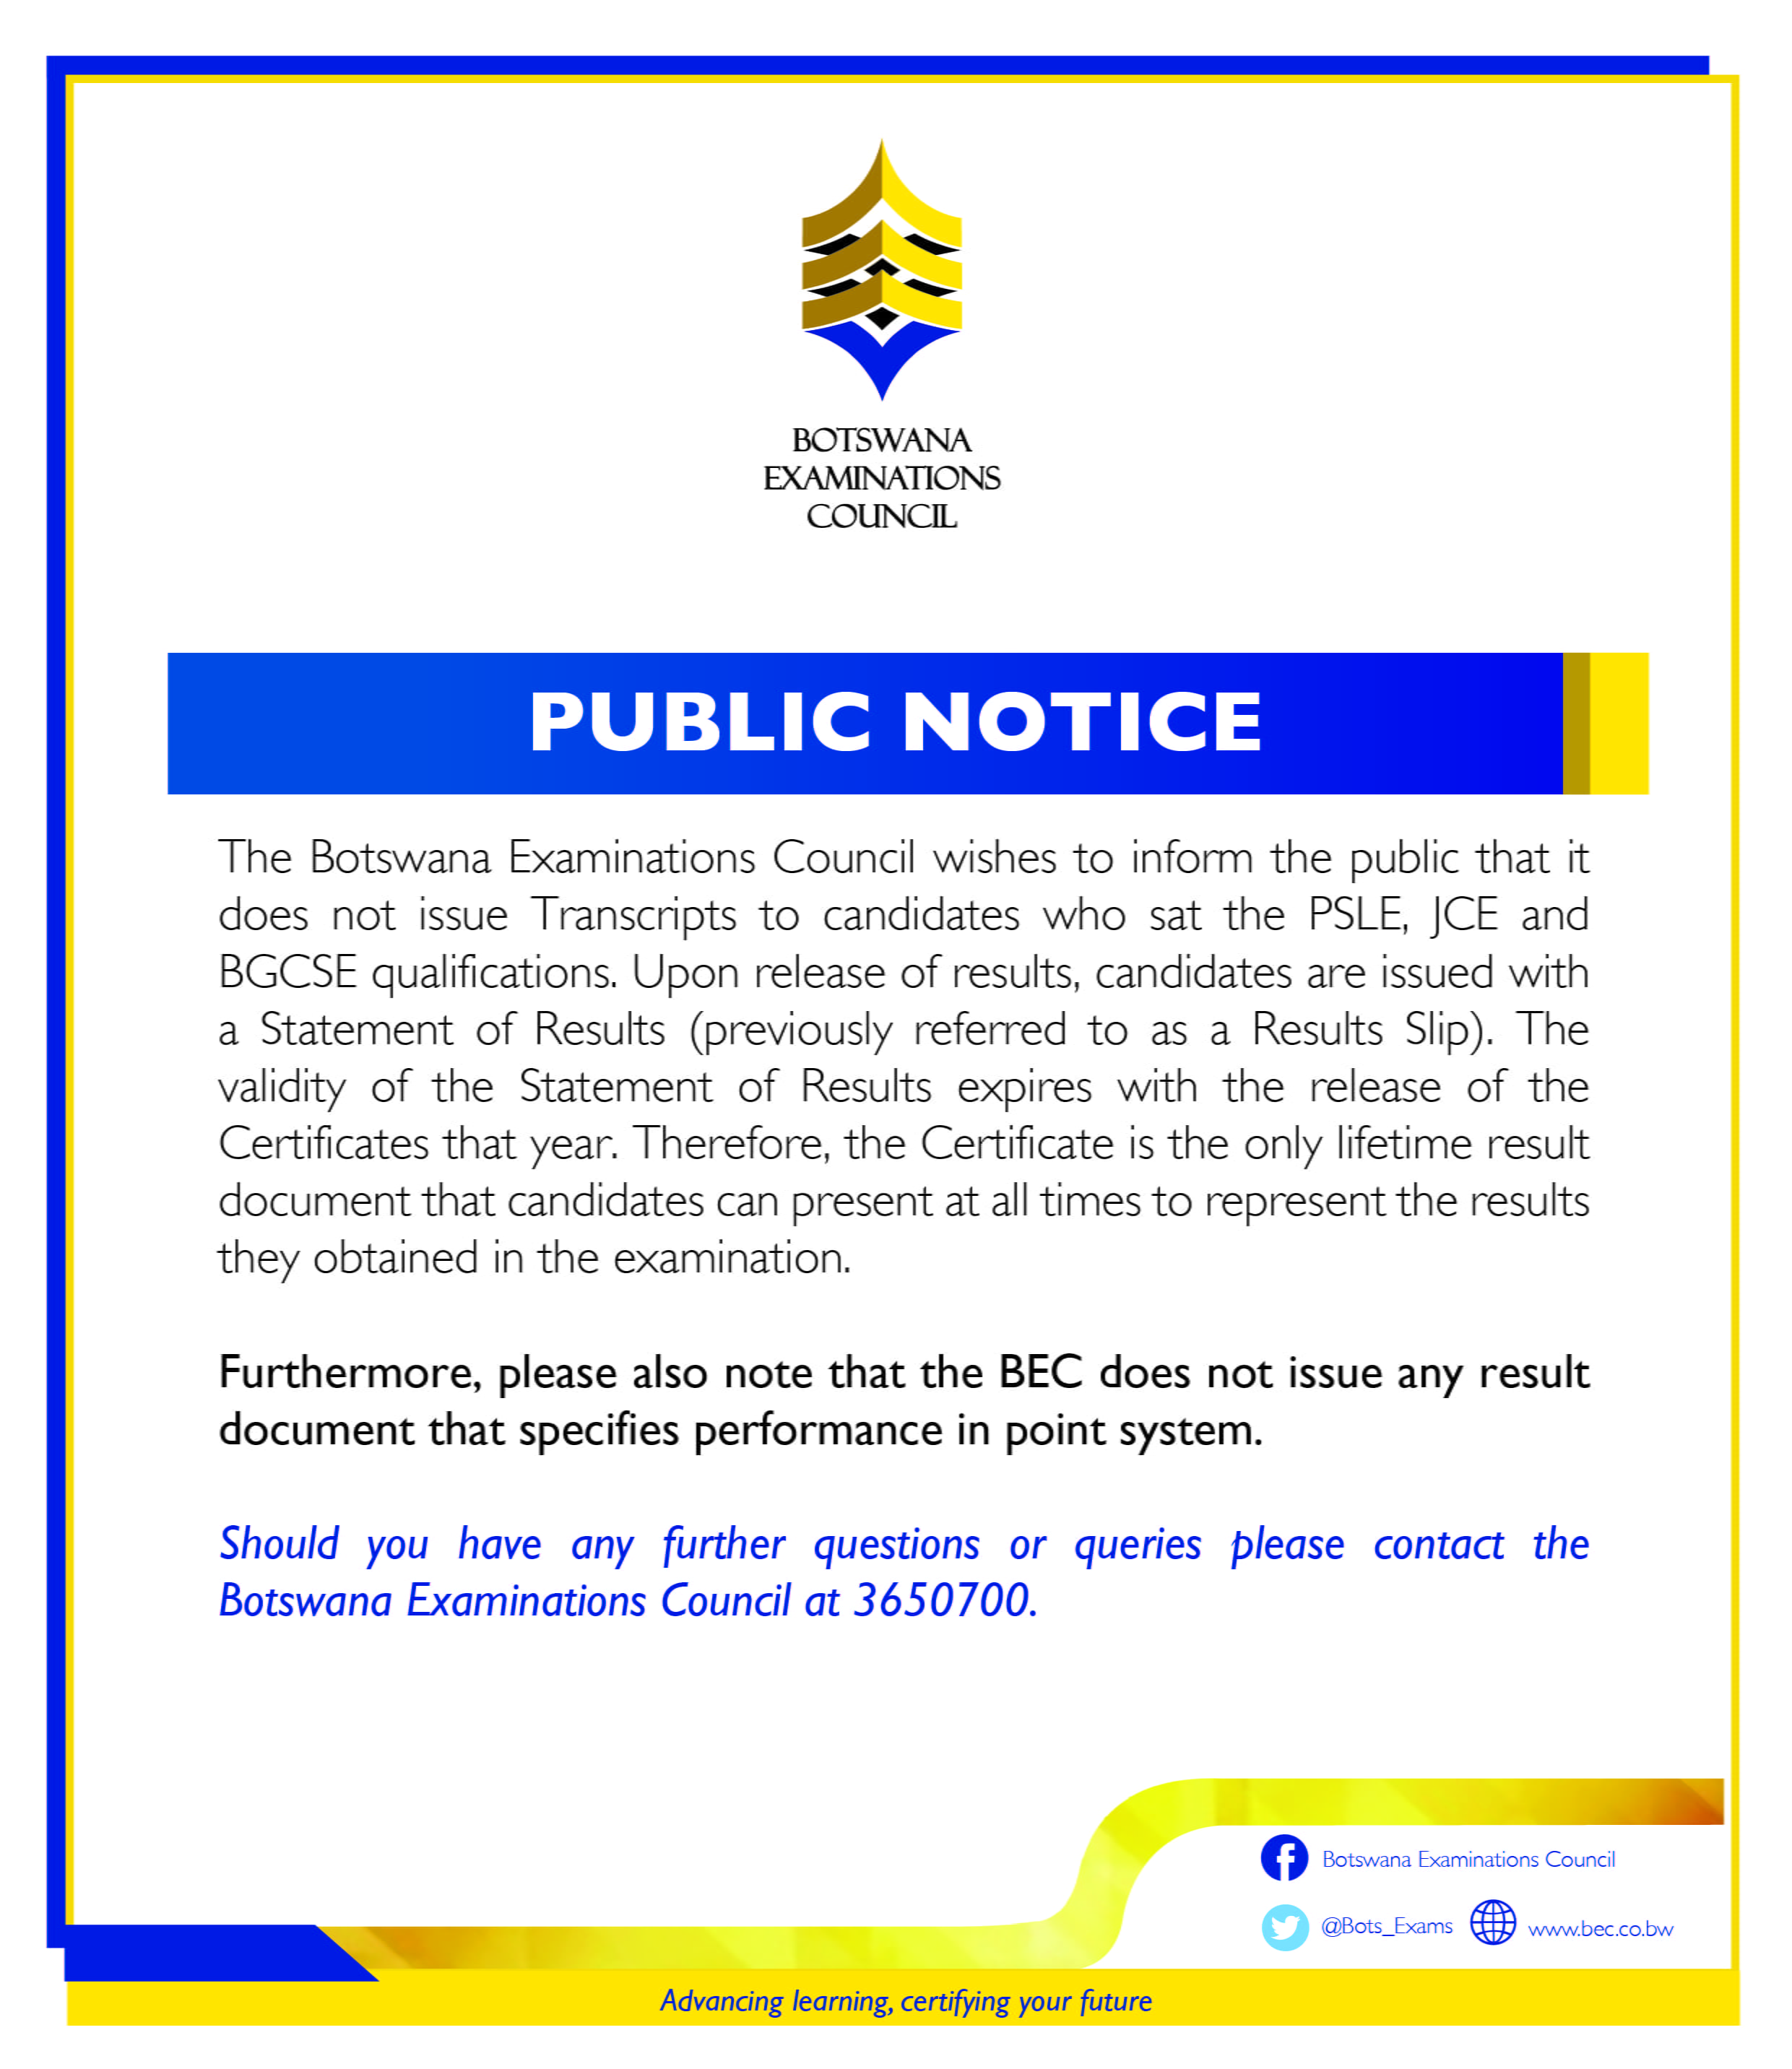 Public_notice_certification-min-min.jpg